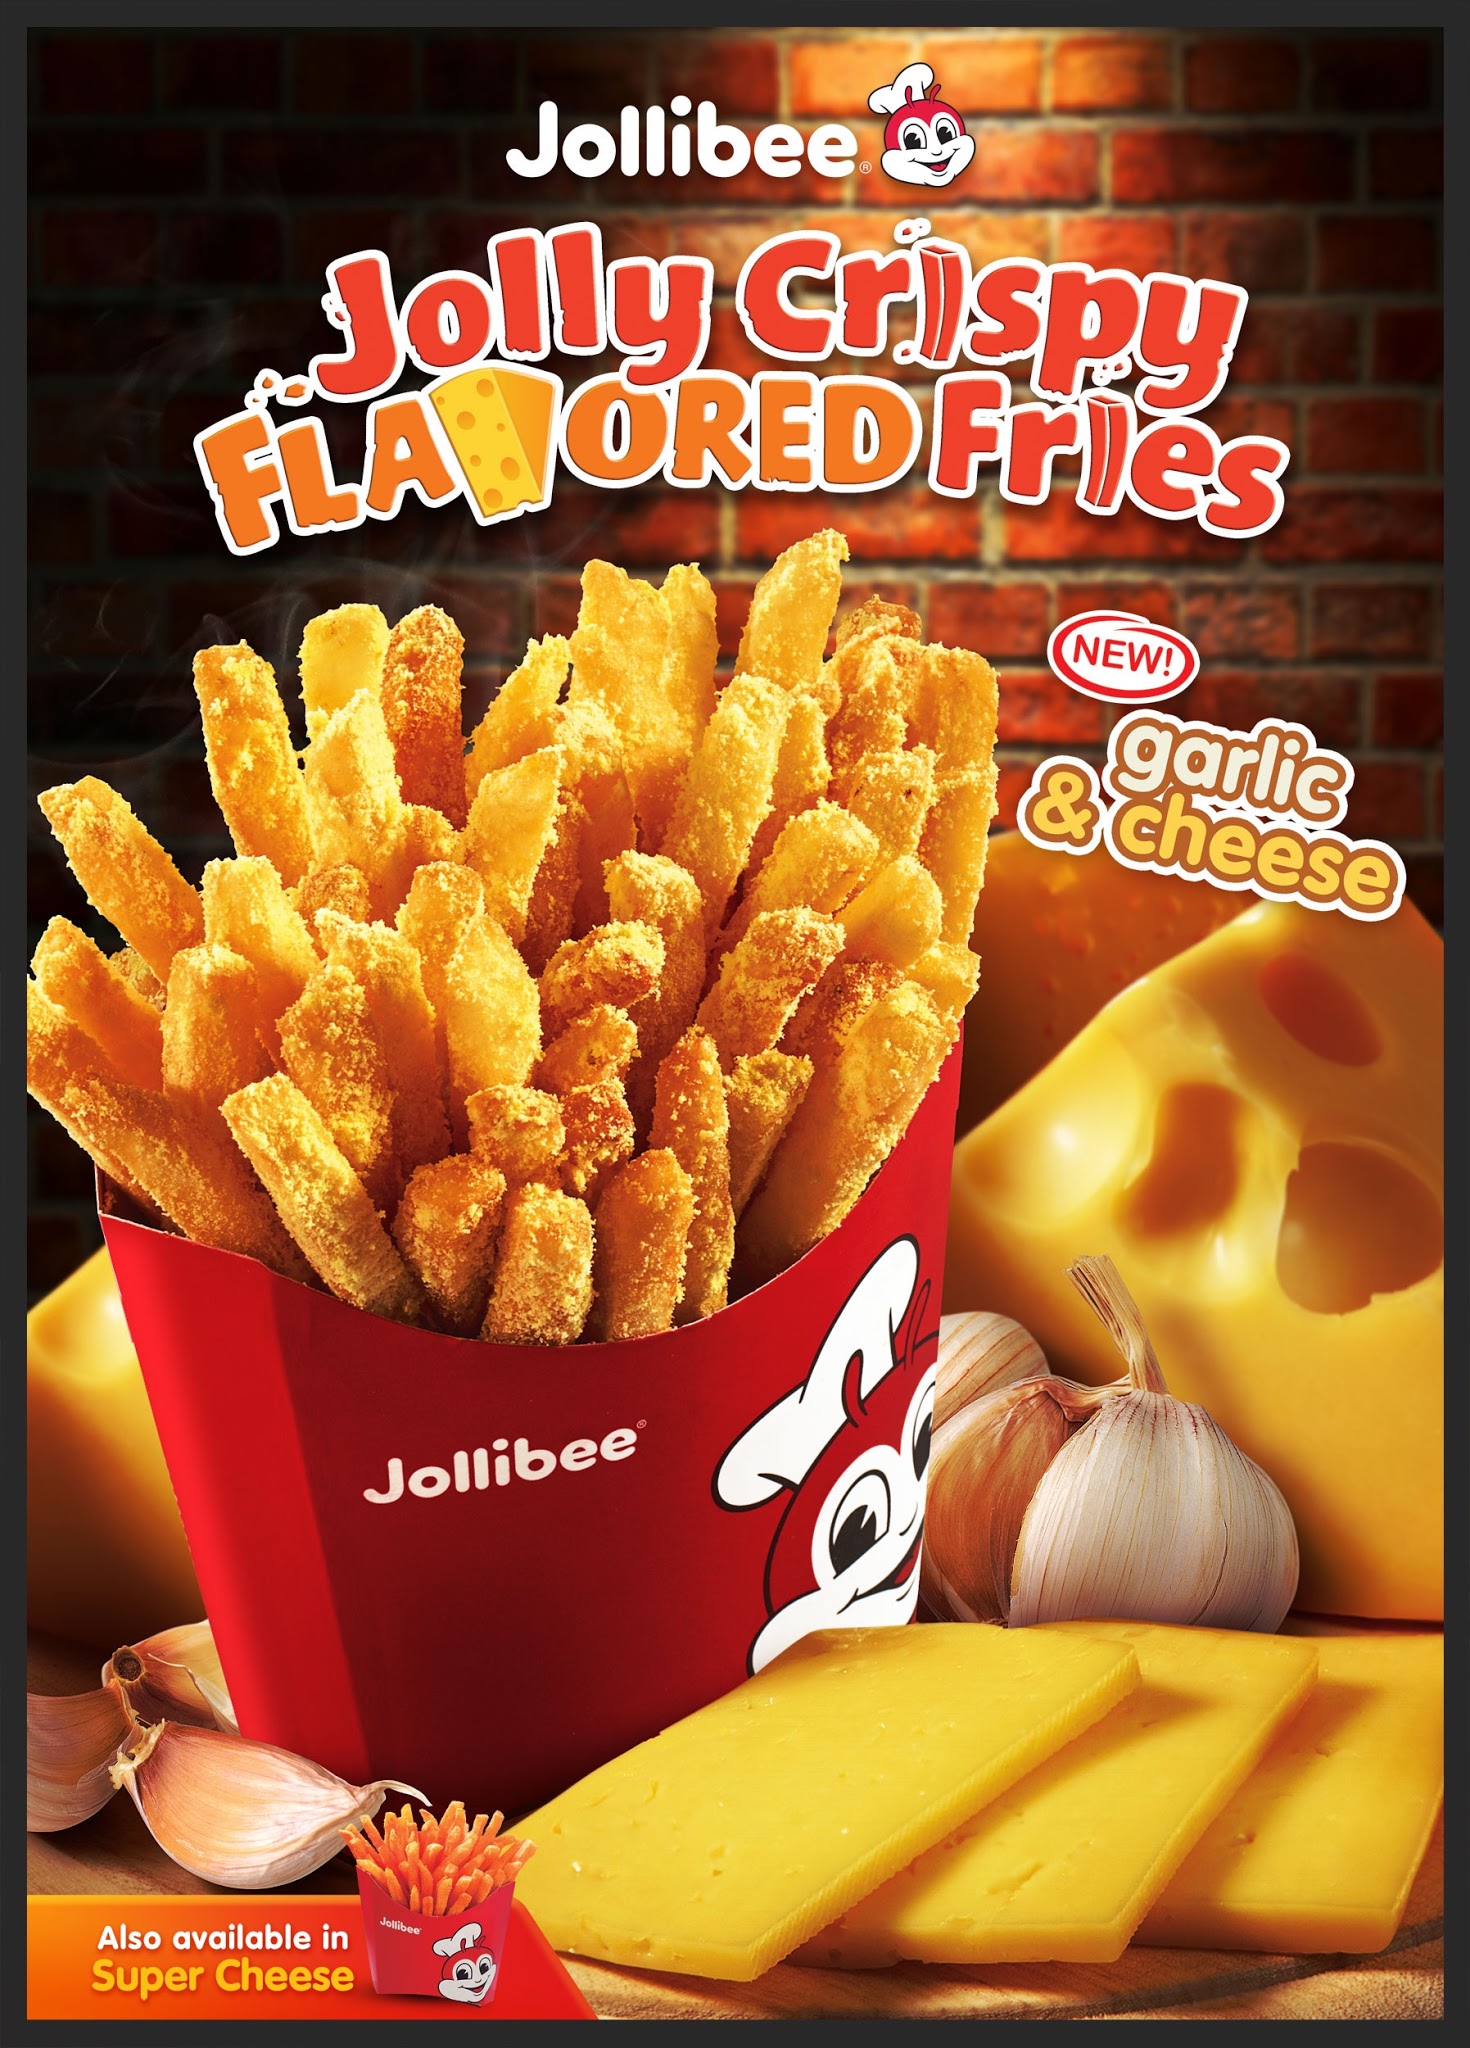 Jolly Crispy Flavored Fries